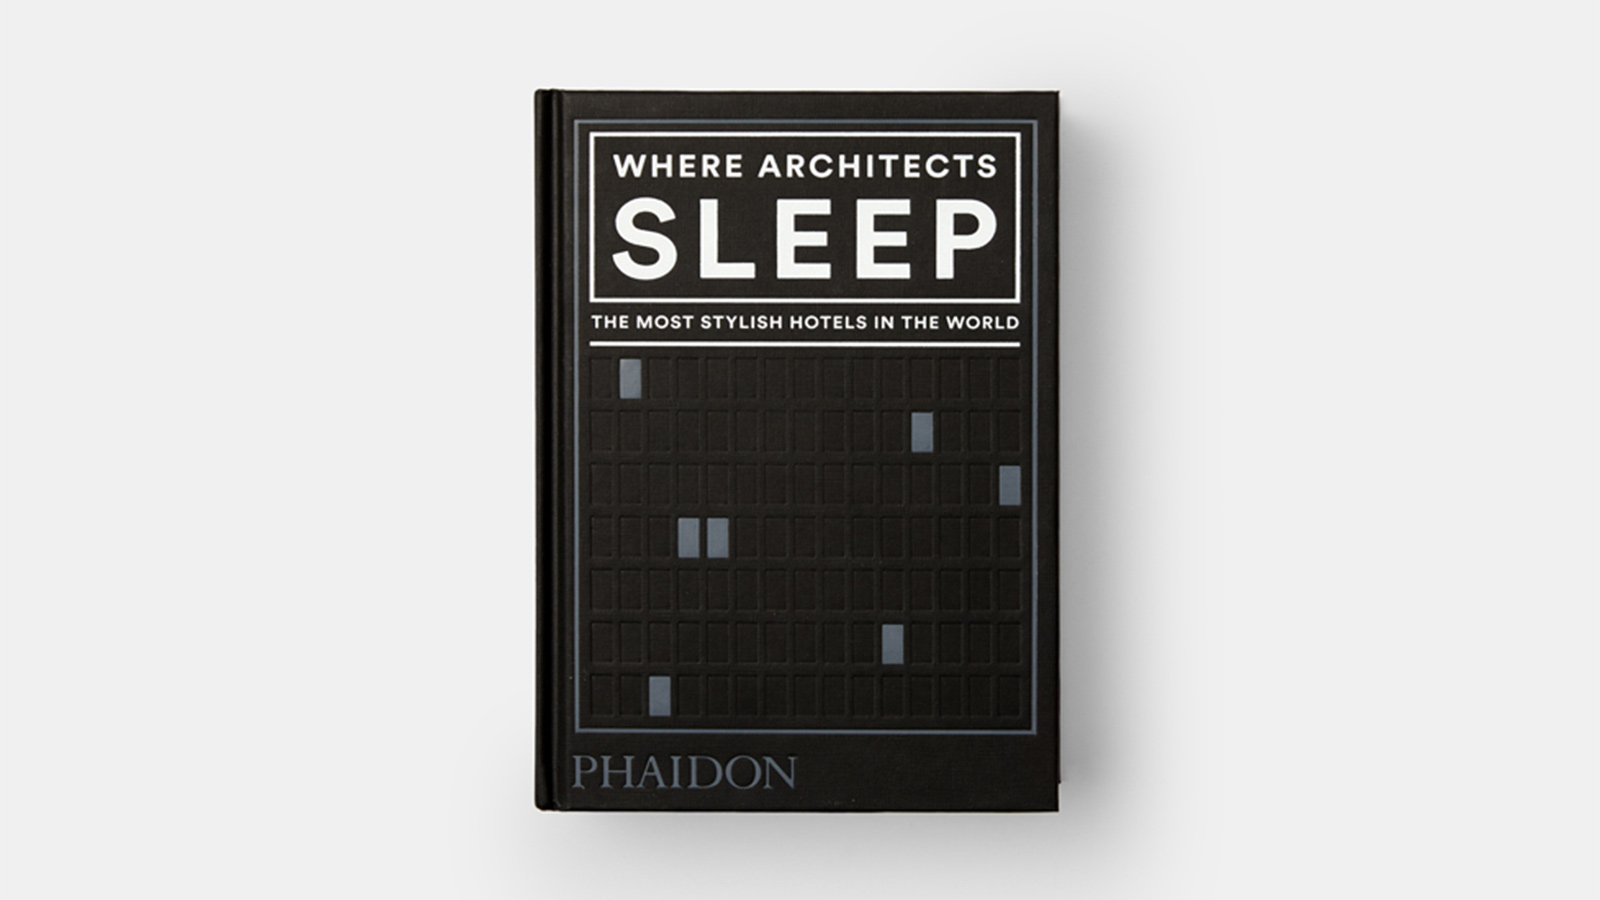 ‘Where Architects Sleep’ by Sarah Miller